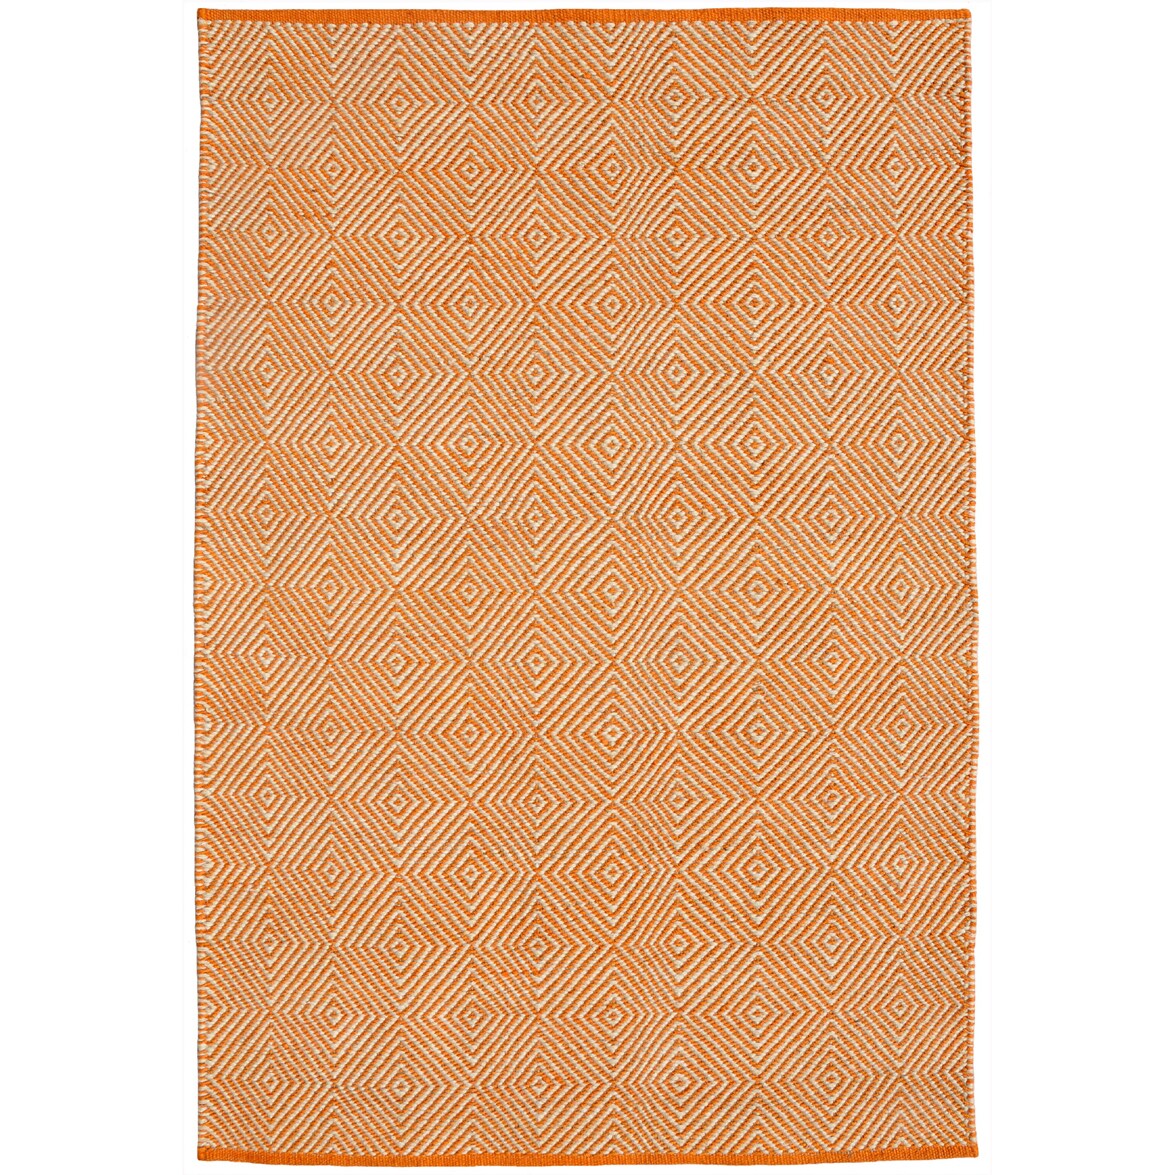 Hand woven Orange Jute Rug (6 X 9)